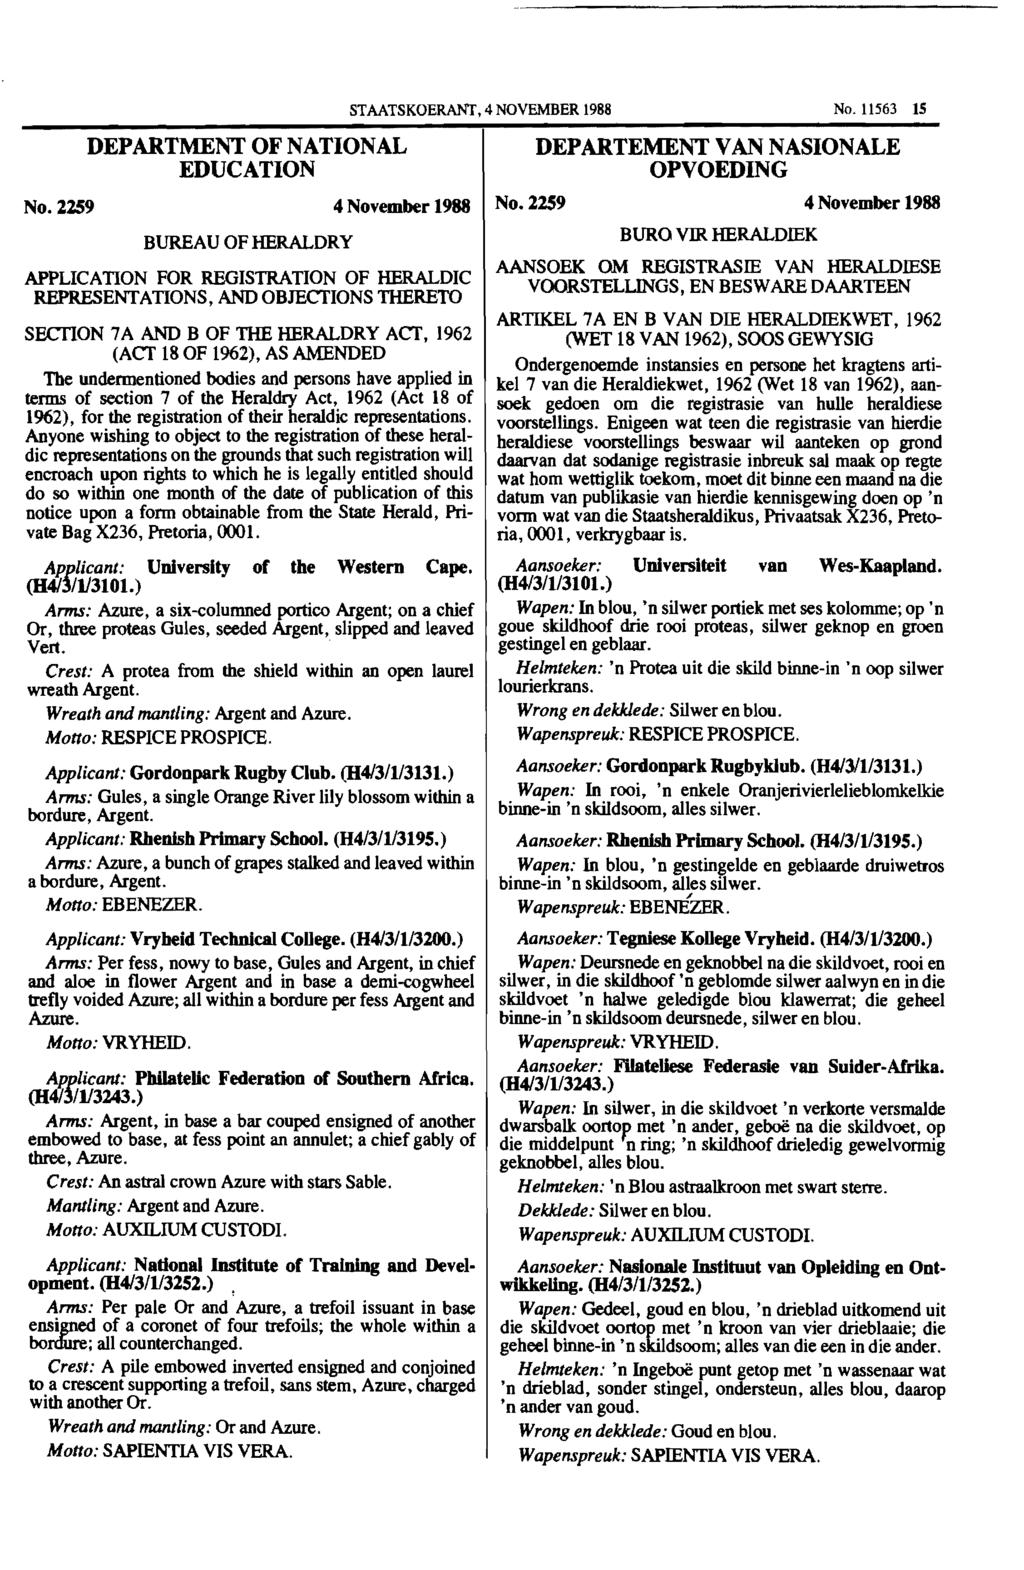 DEPARTMENT OF NATIONAL EDUCATION STAATSKOERANT. 4 NOVEMBER 1988 No.11563 15 DEPARTEMENT VAN NASIONALE OPVOEDING No. 2259 4 November 1988 No.